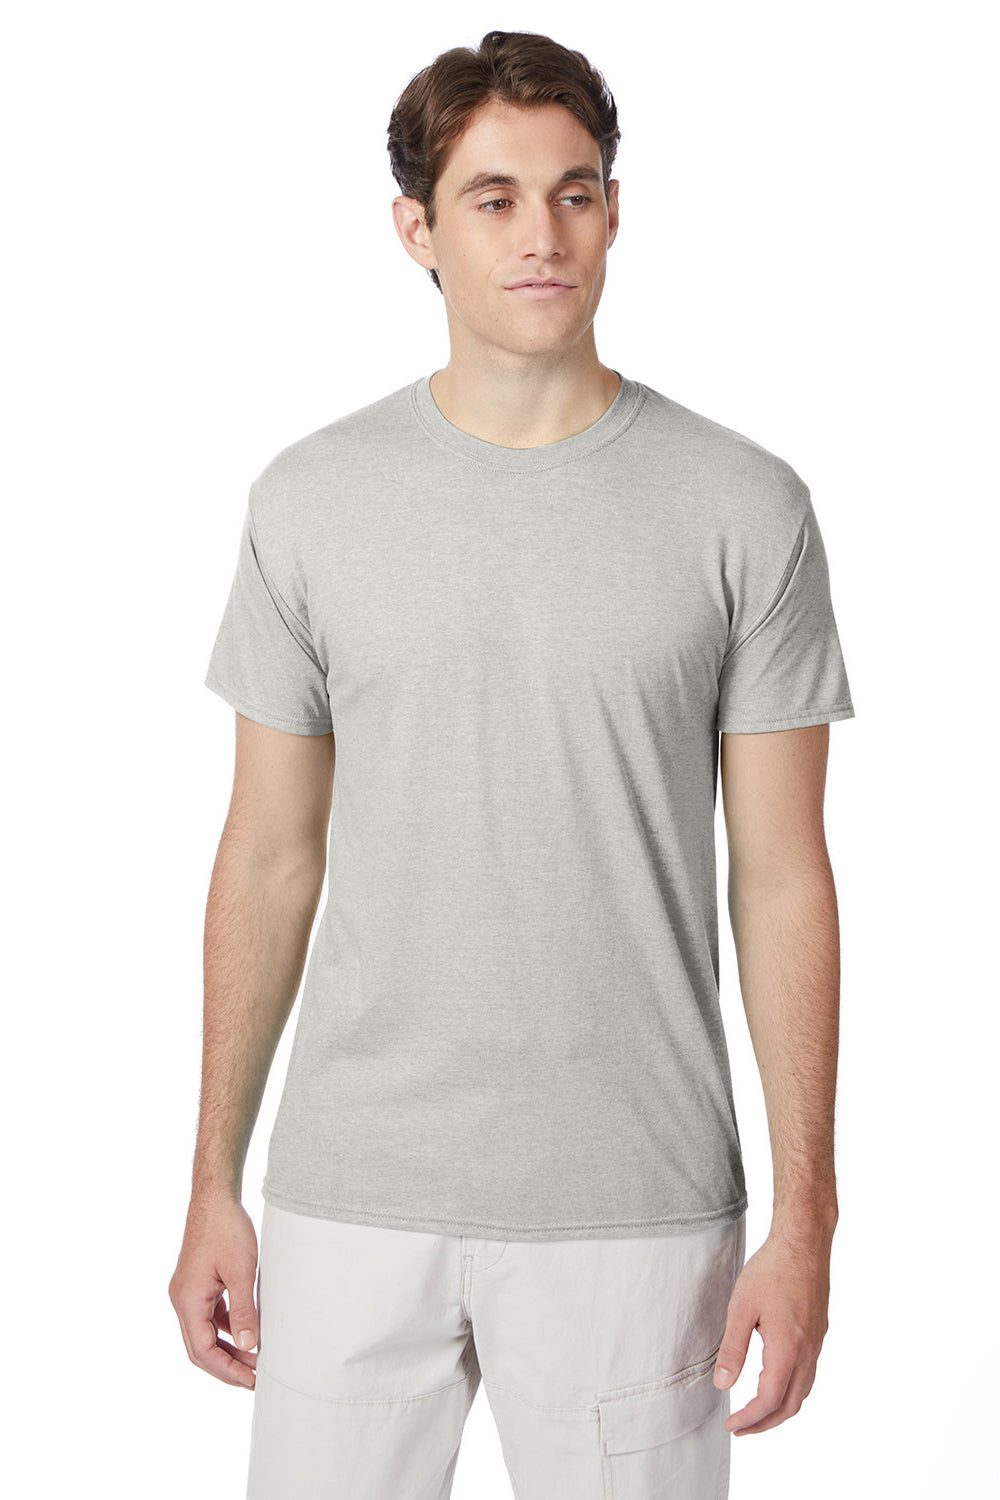 Hanes 42TB Mens X-Temp FreshIQ Moisture Wicking Short Sleeve Crewneck T-Shirt Heather Sand Front